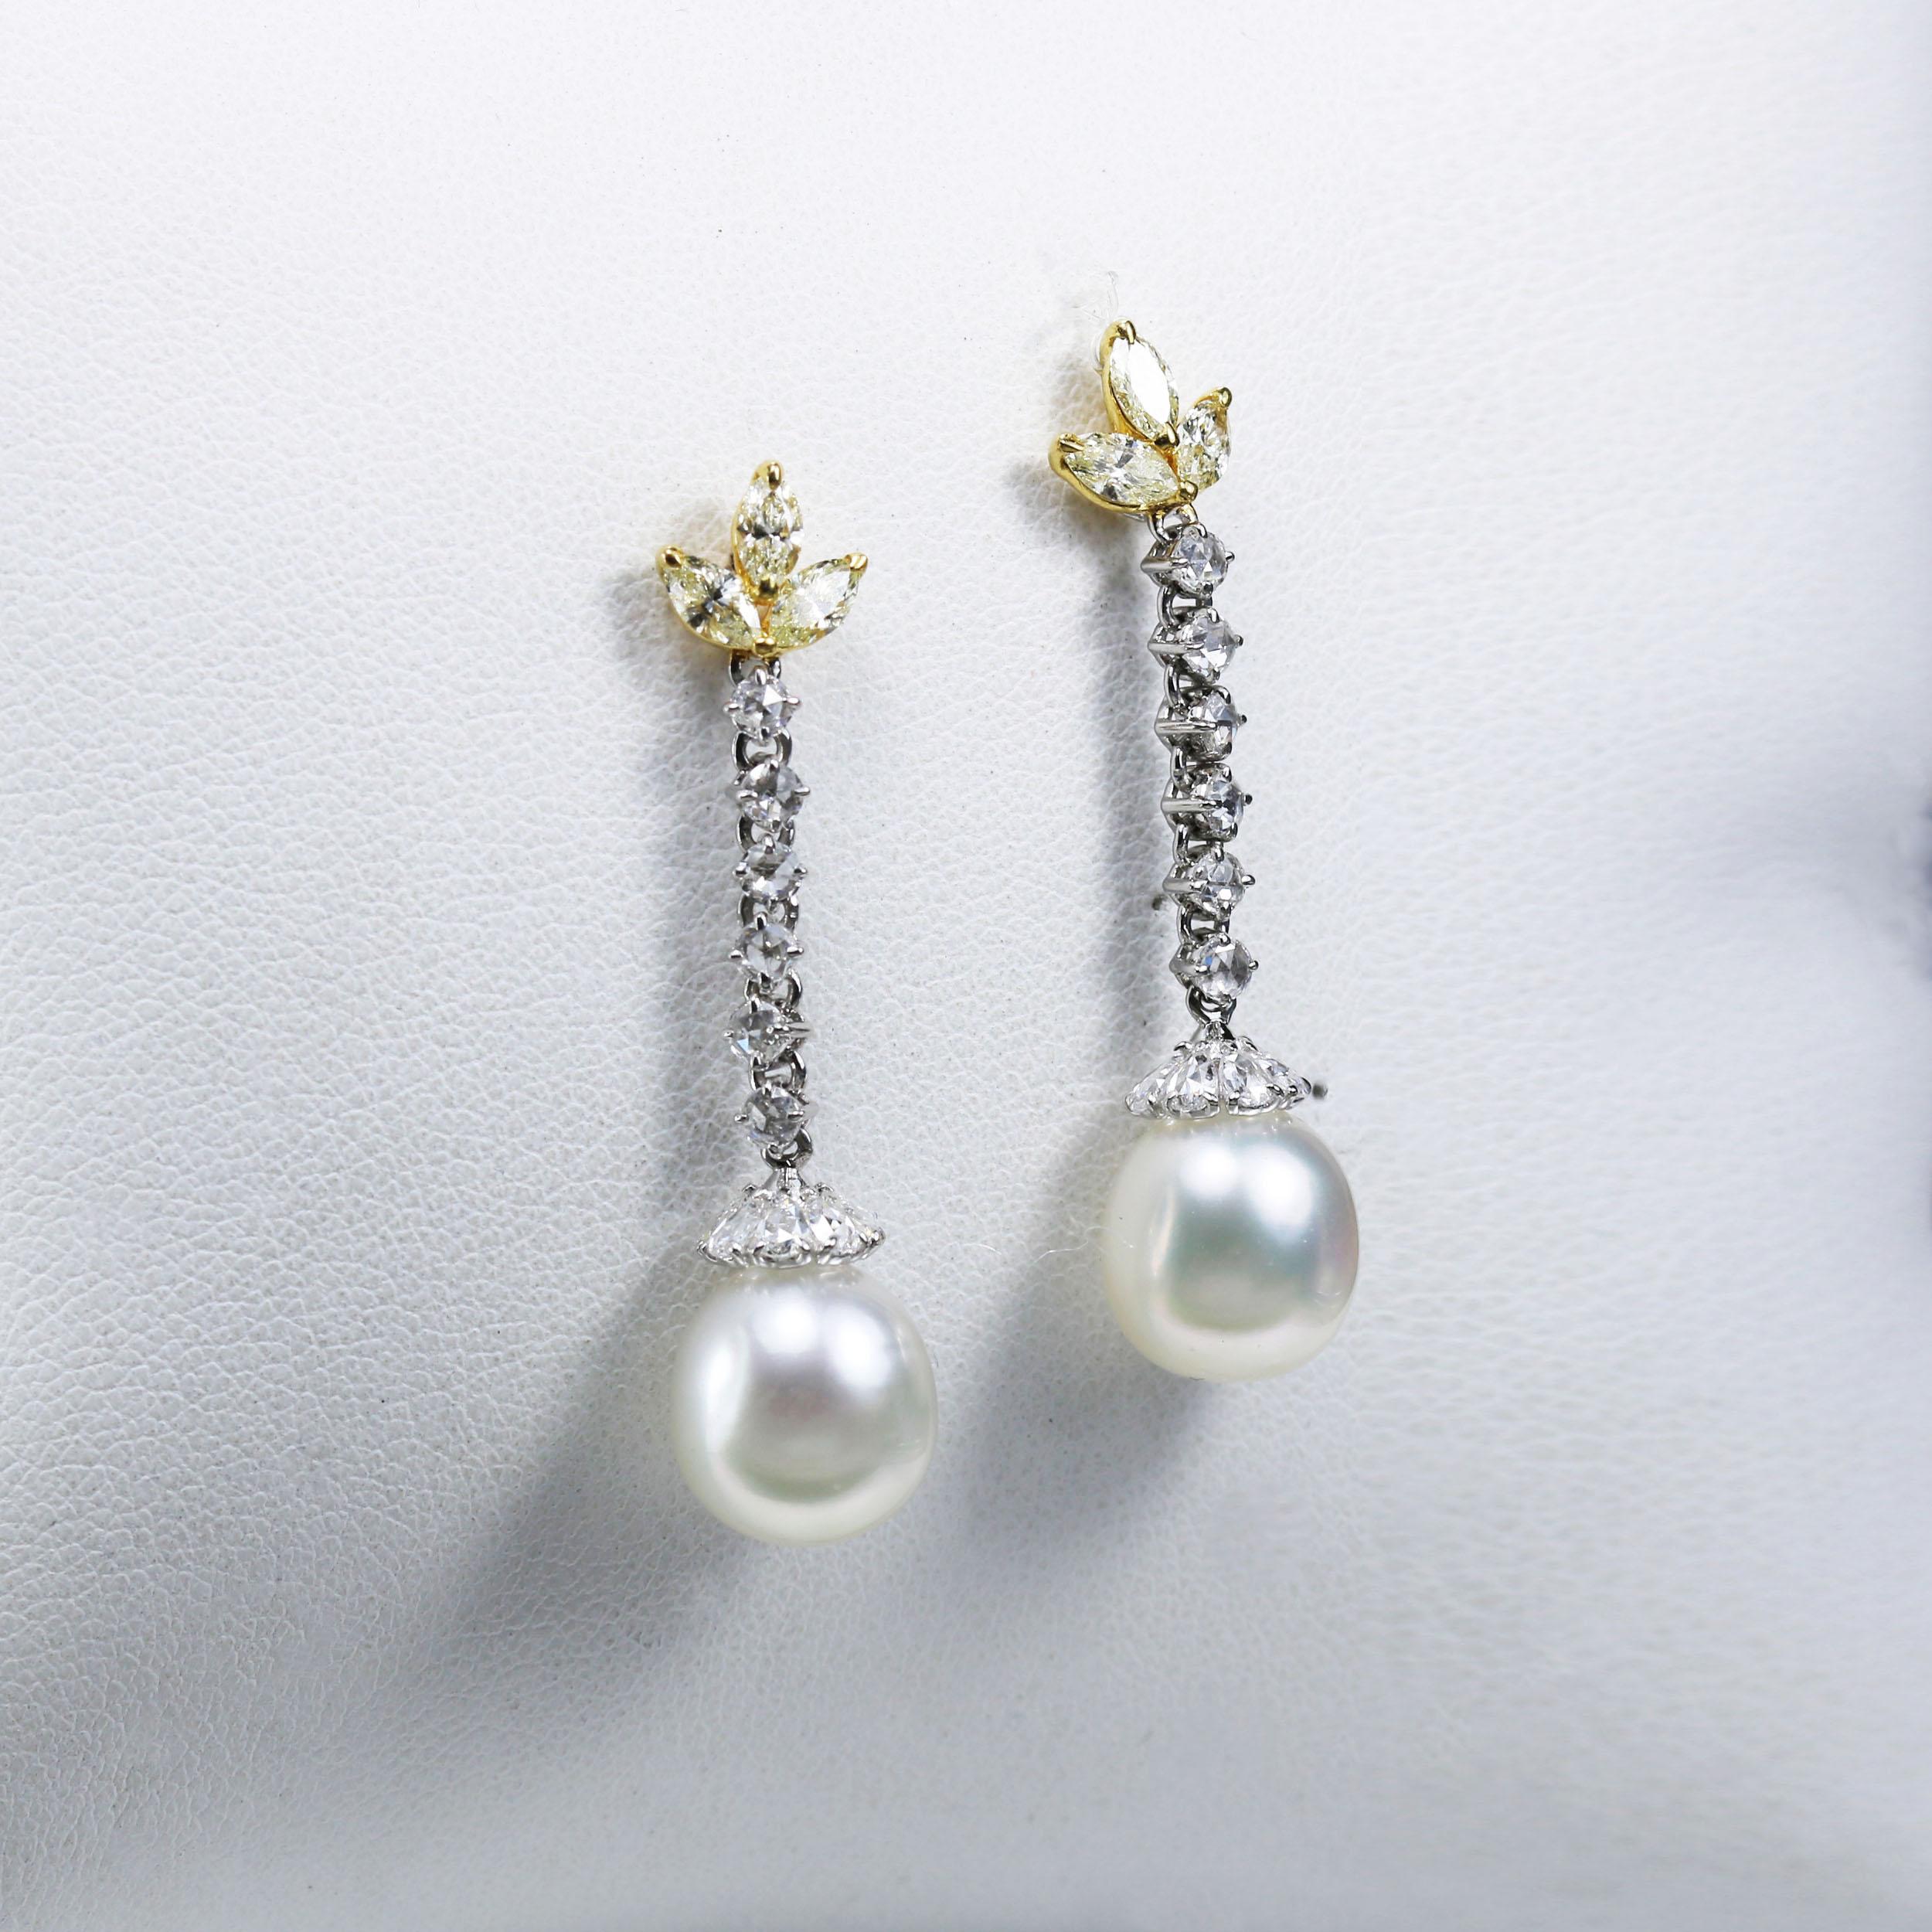 Studio Rêves Rose cut Diamonds and South Sea Pearls Earrings in 18 Karat Gold For Sale 1